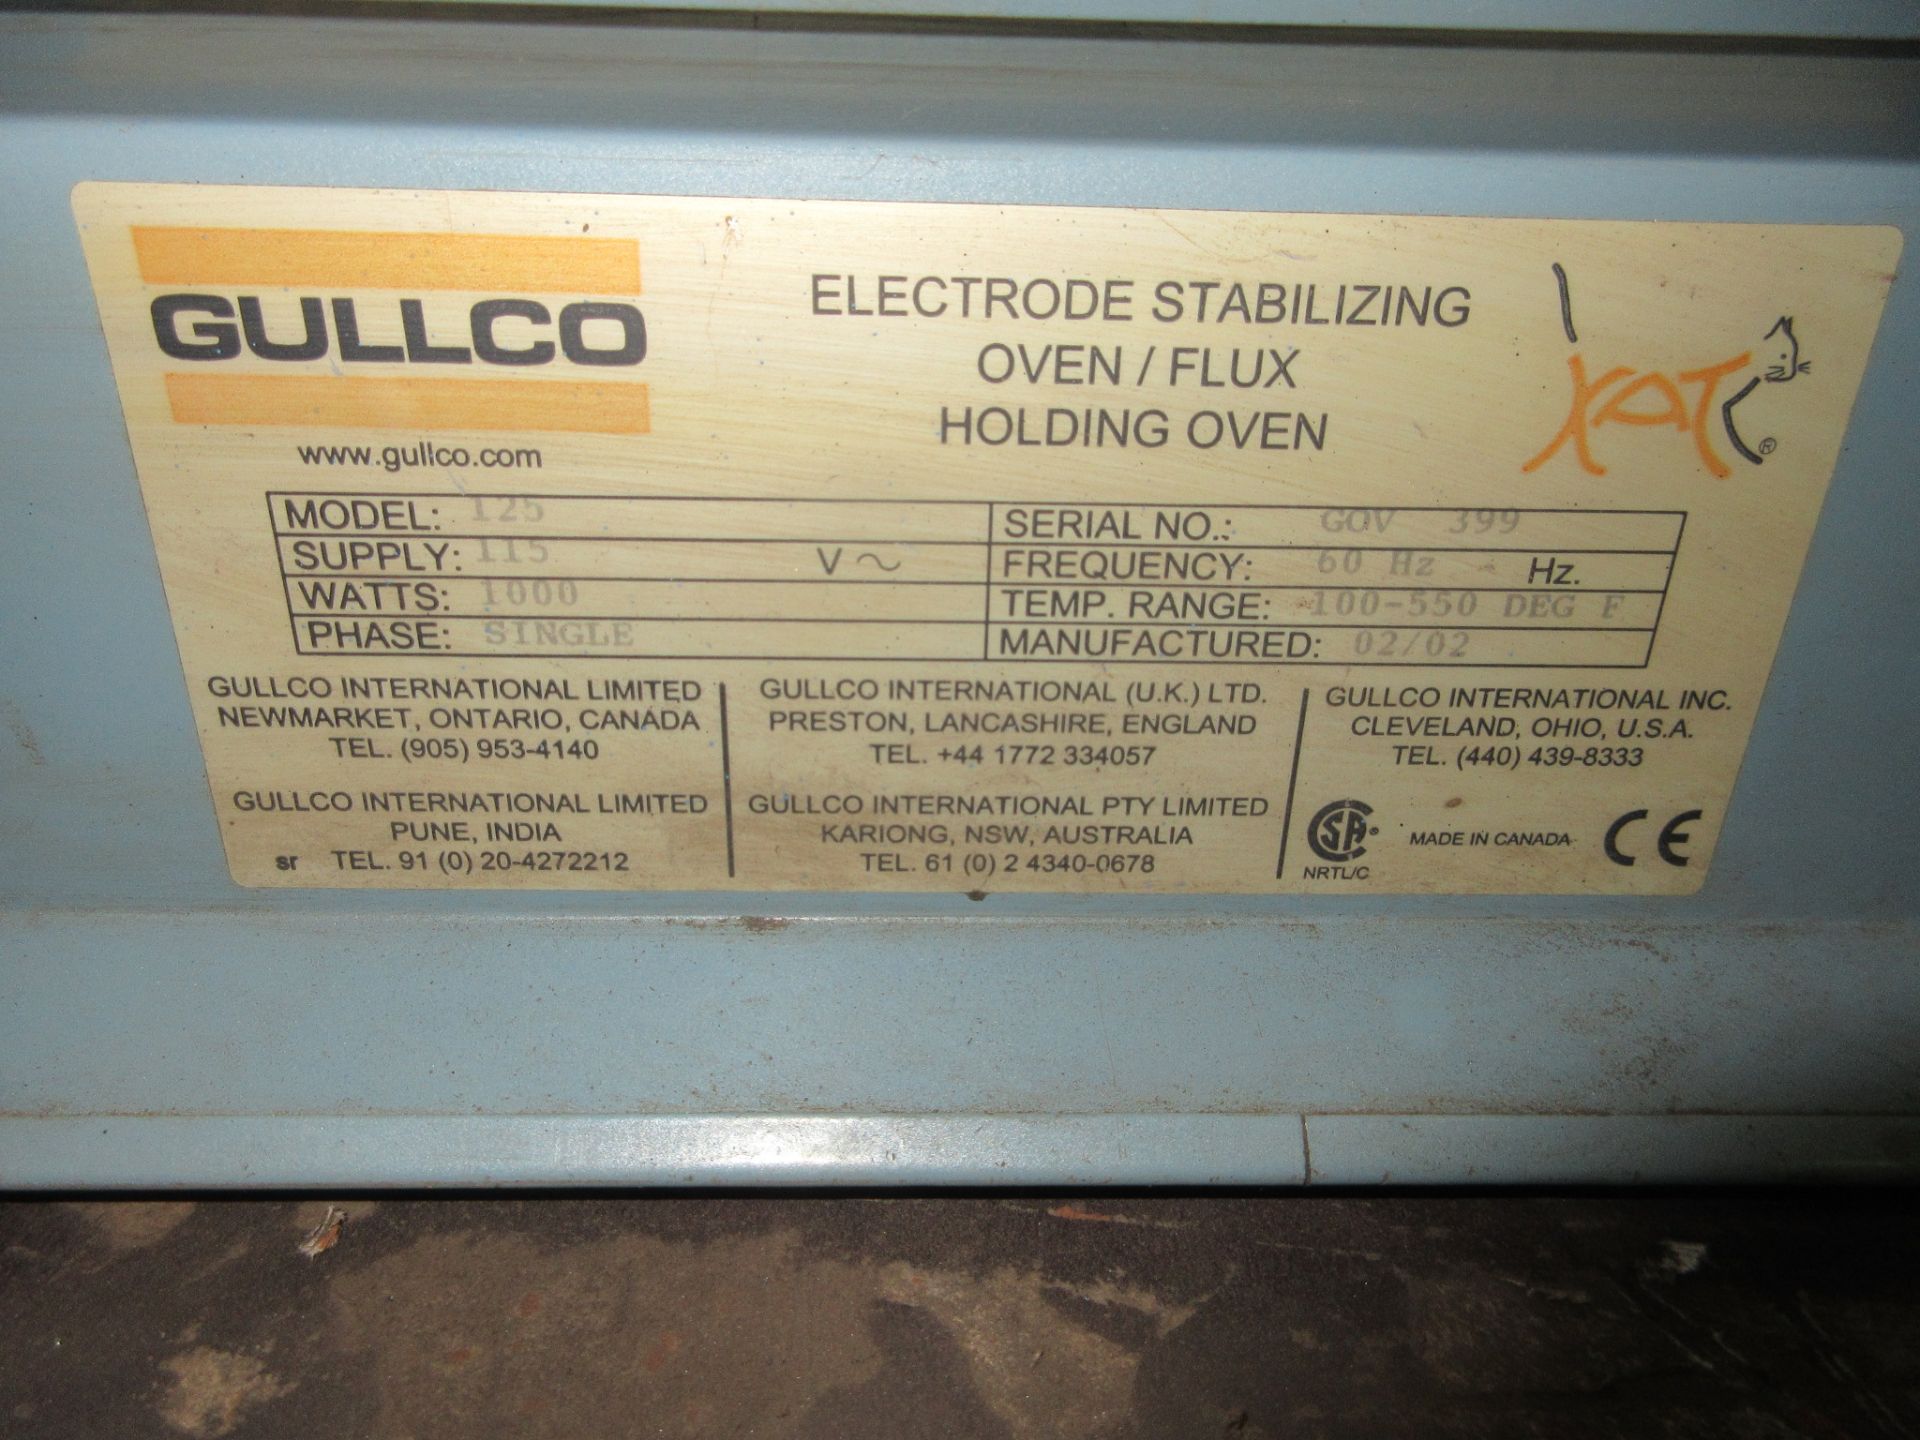 GULLCO MODEL 125 ELECTRODE STABLIZING OVEN - Image 3 of 3